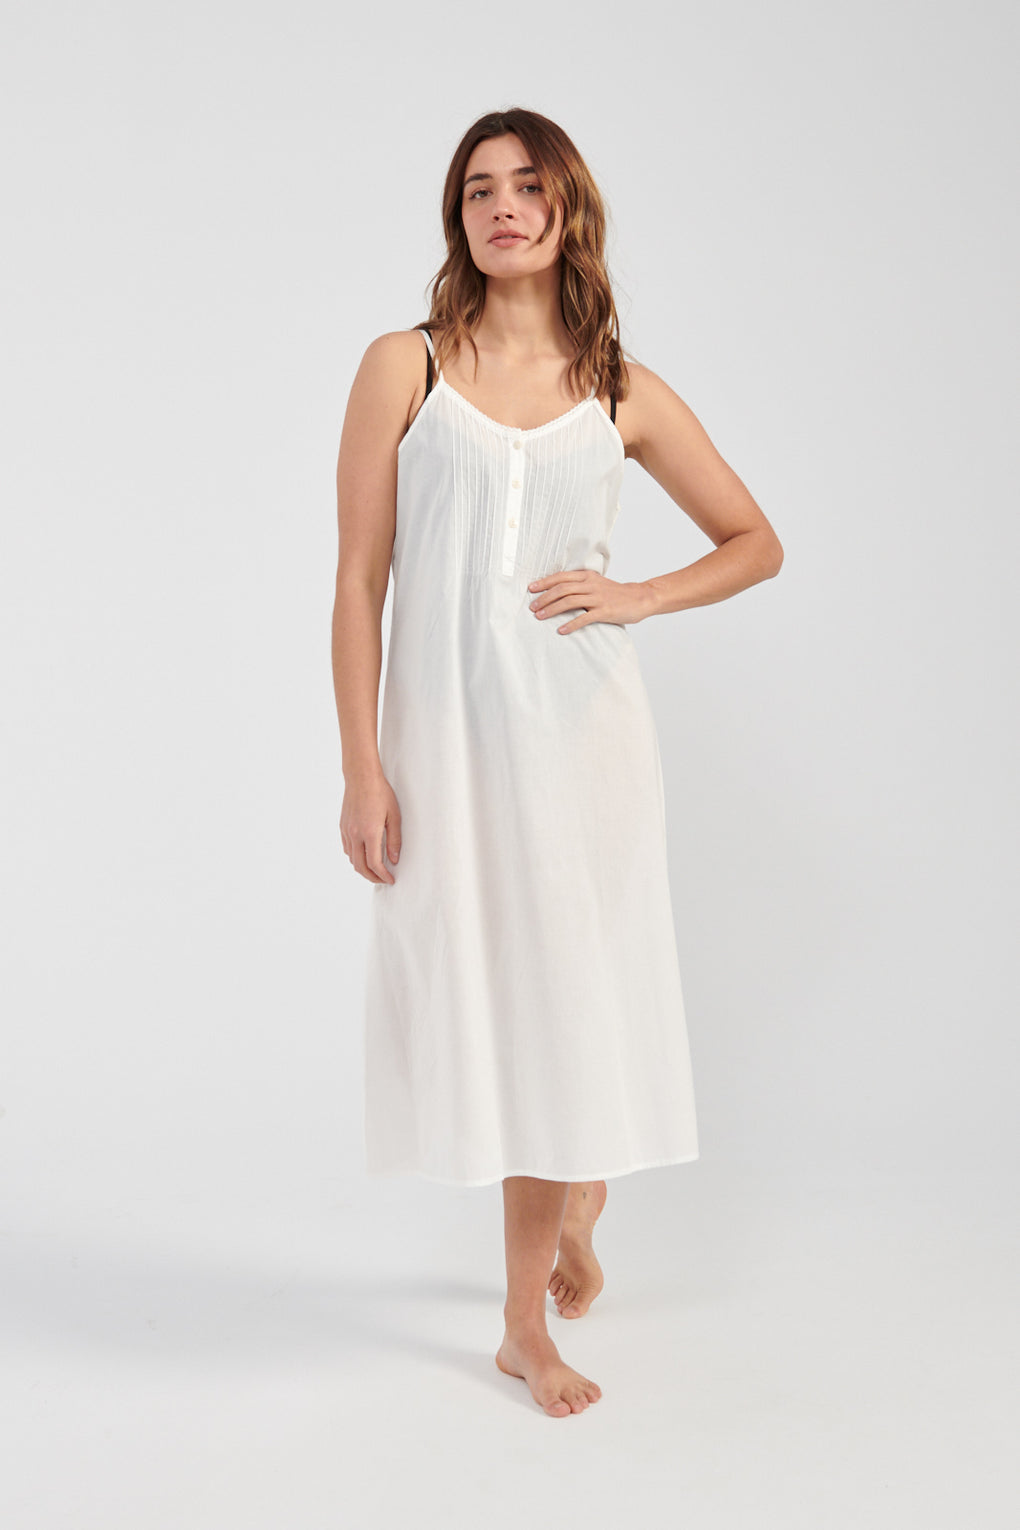 Salter Dress The First Nightdress white-Salter Dress white nightgown dress-Idun-St. Paul